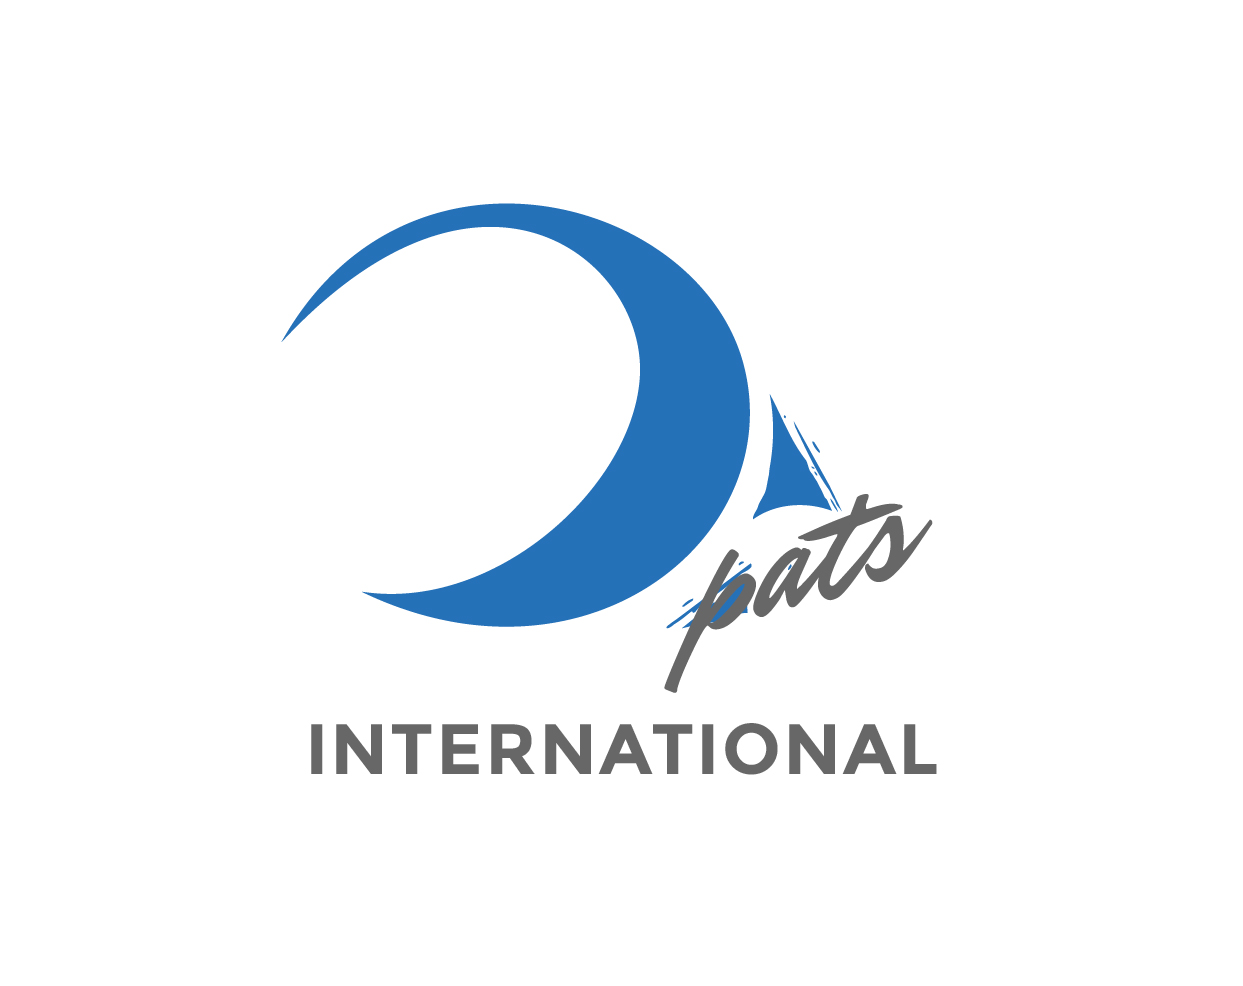 XPATS INTERNATIONAL LOGO